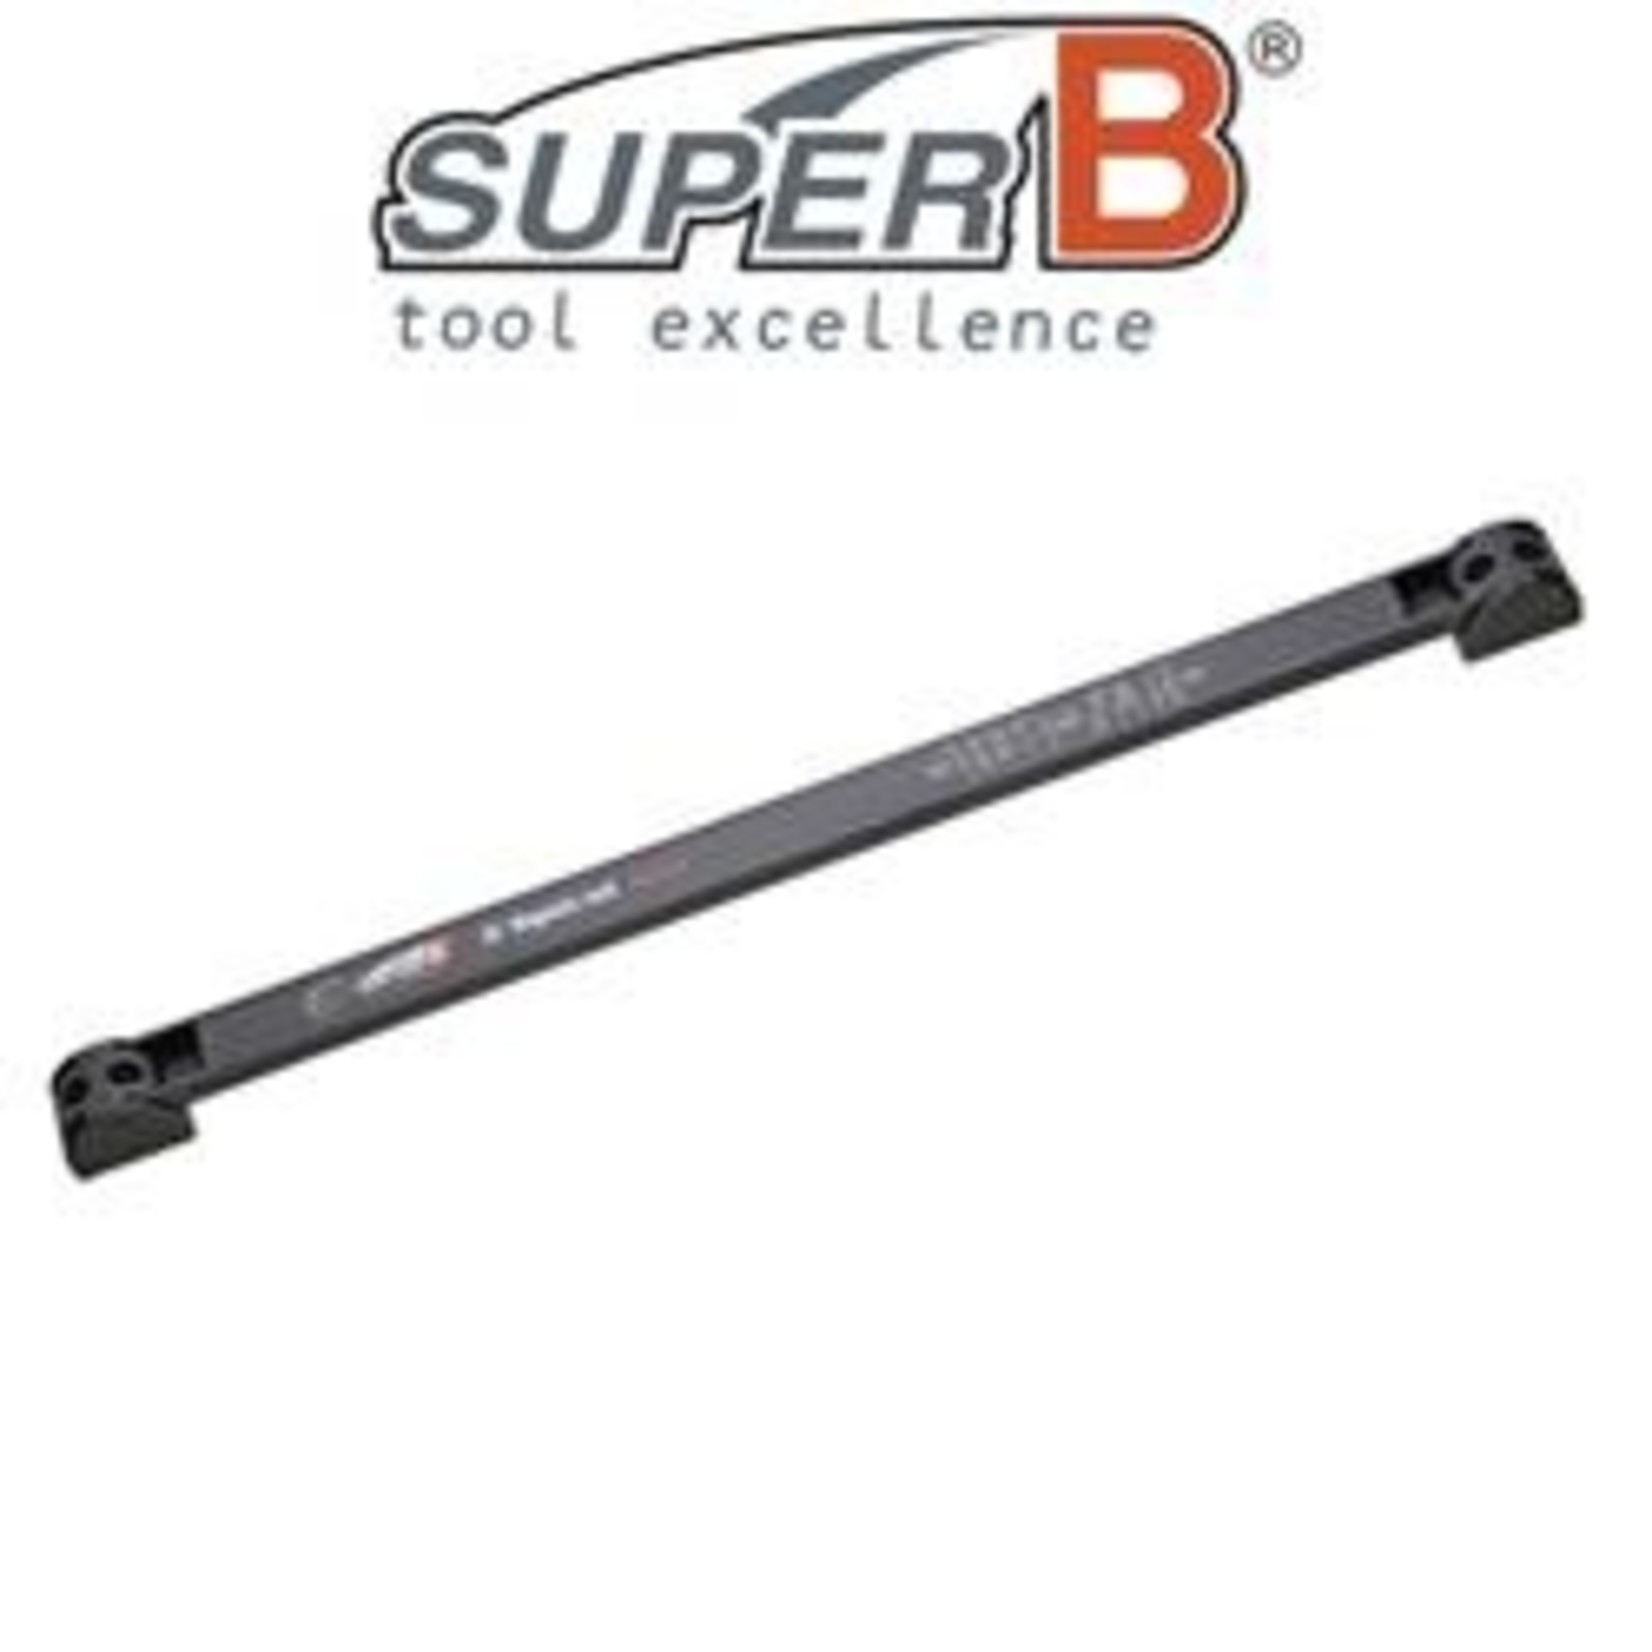 Super B SuperB 50cm Powerful Permanent Magnetic Force Rack - Bike Tool